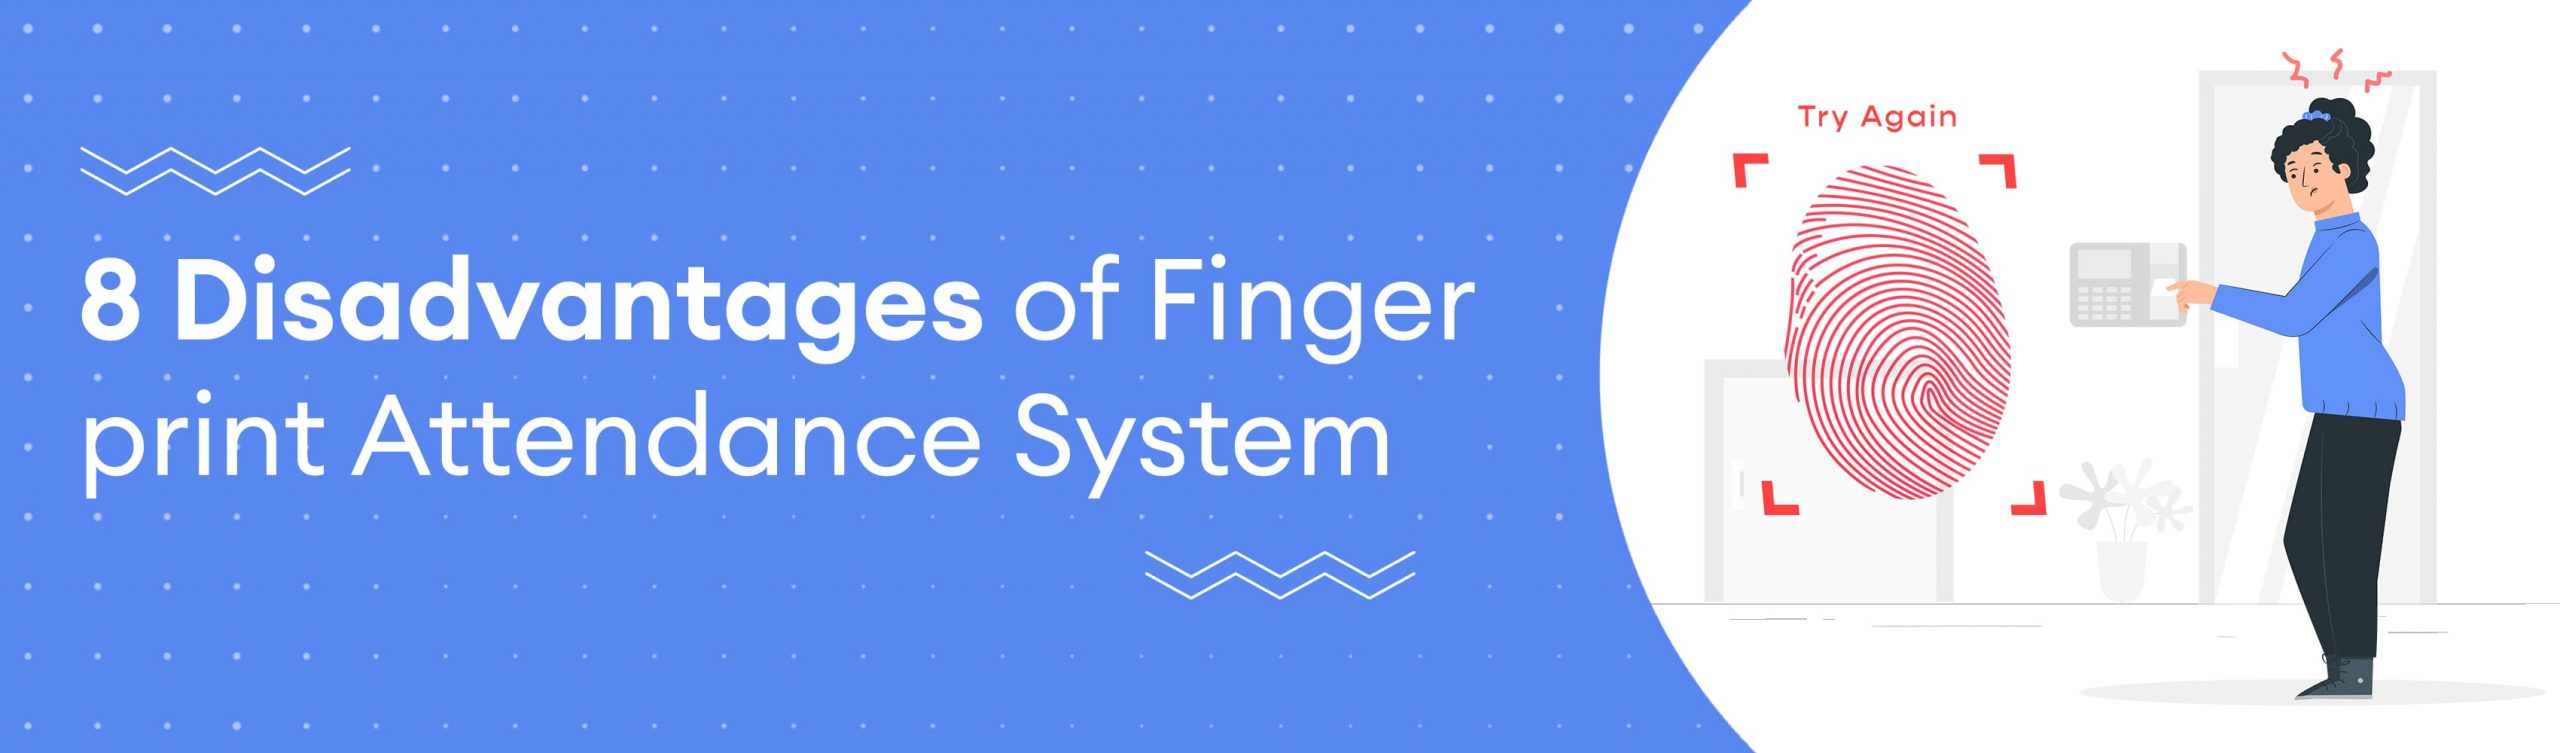 8 Disadvantages of Fingerprint Attendance System